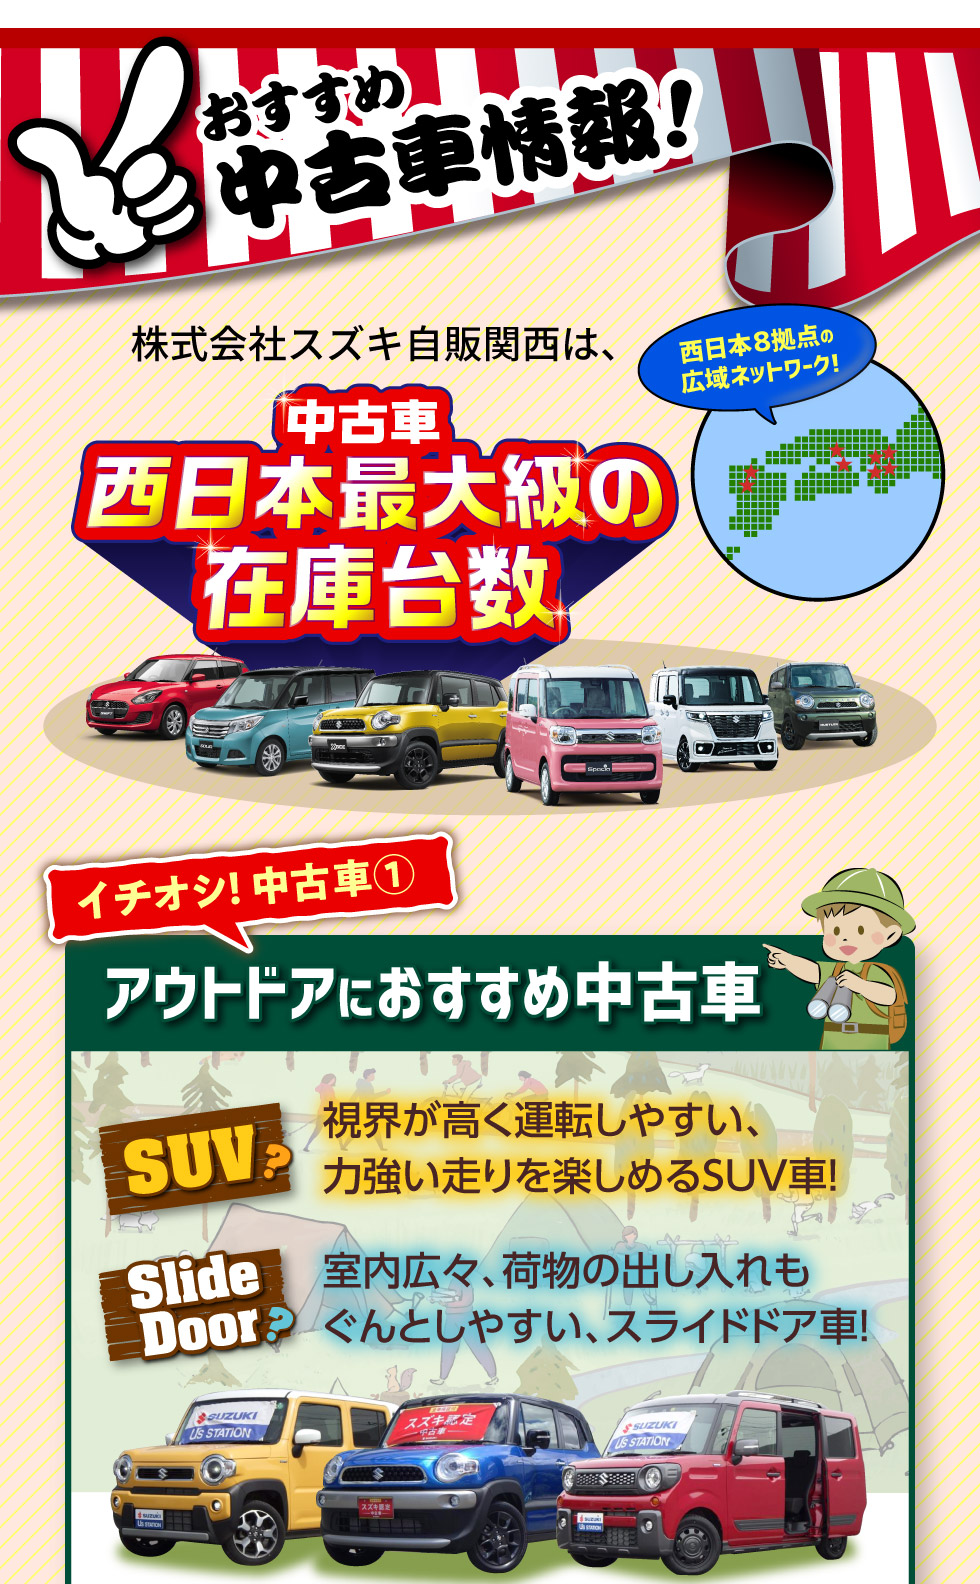 スズキ自販関西は、西日本８拠点で西日本最大級の中古車在庫台数